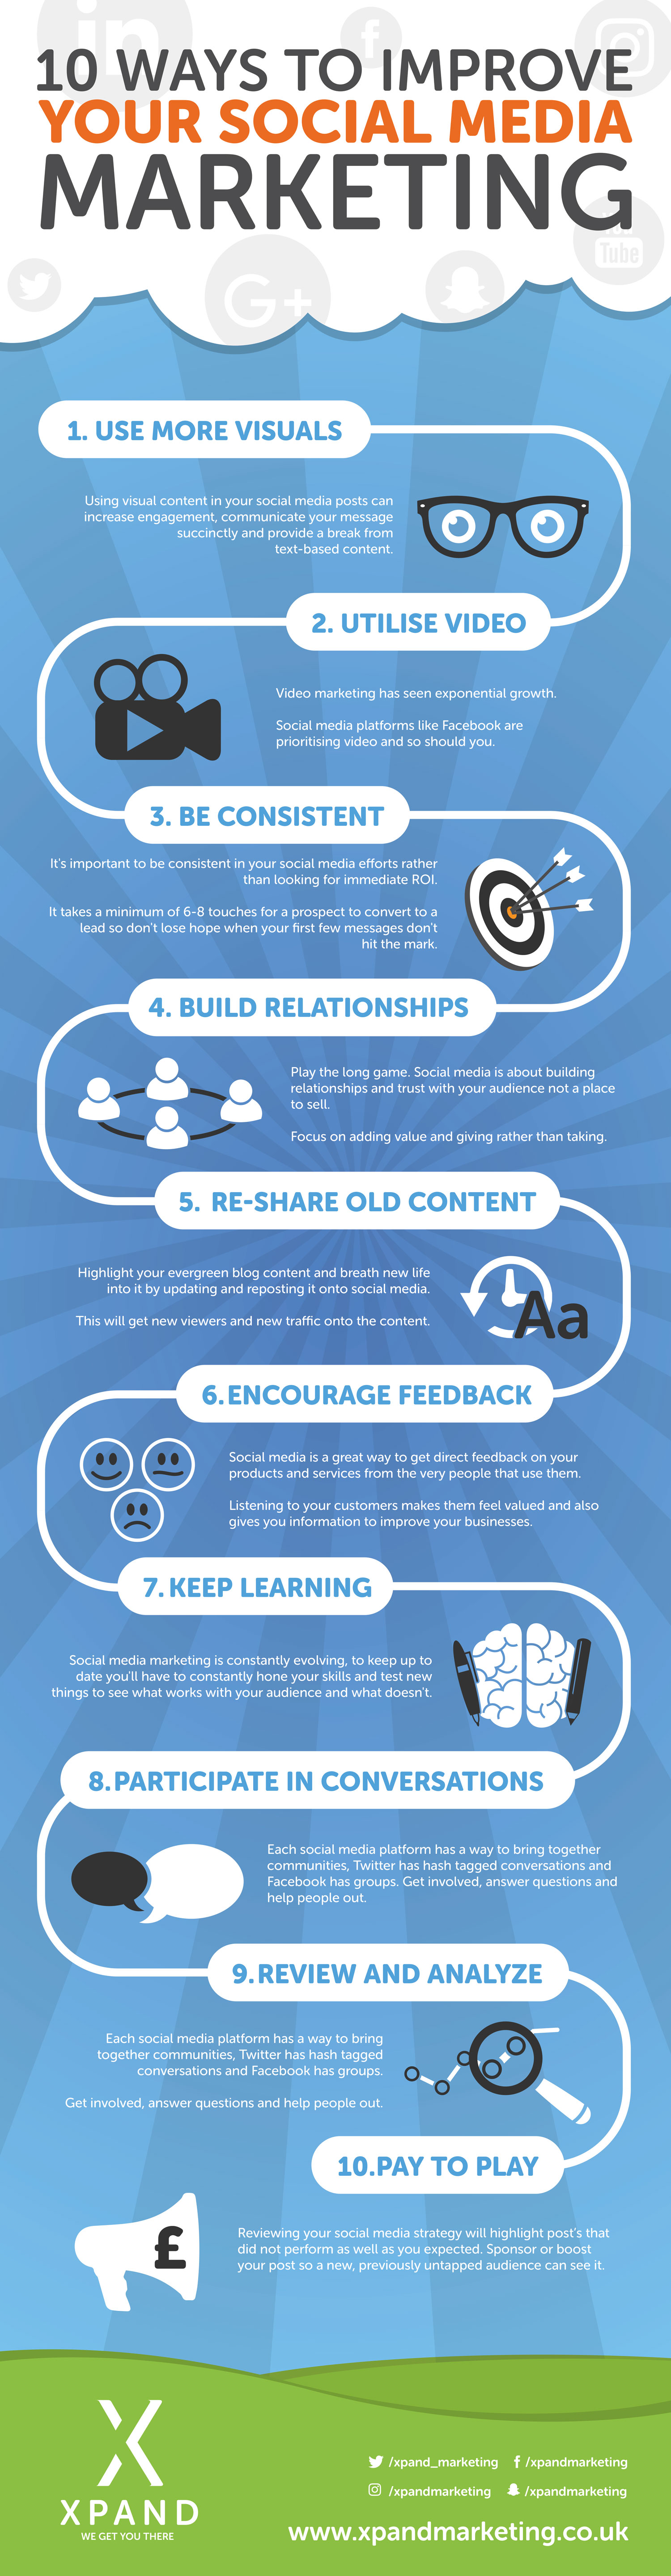 10-tips-to-improve-social-media-marketing